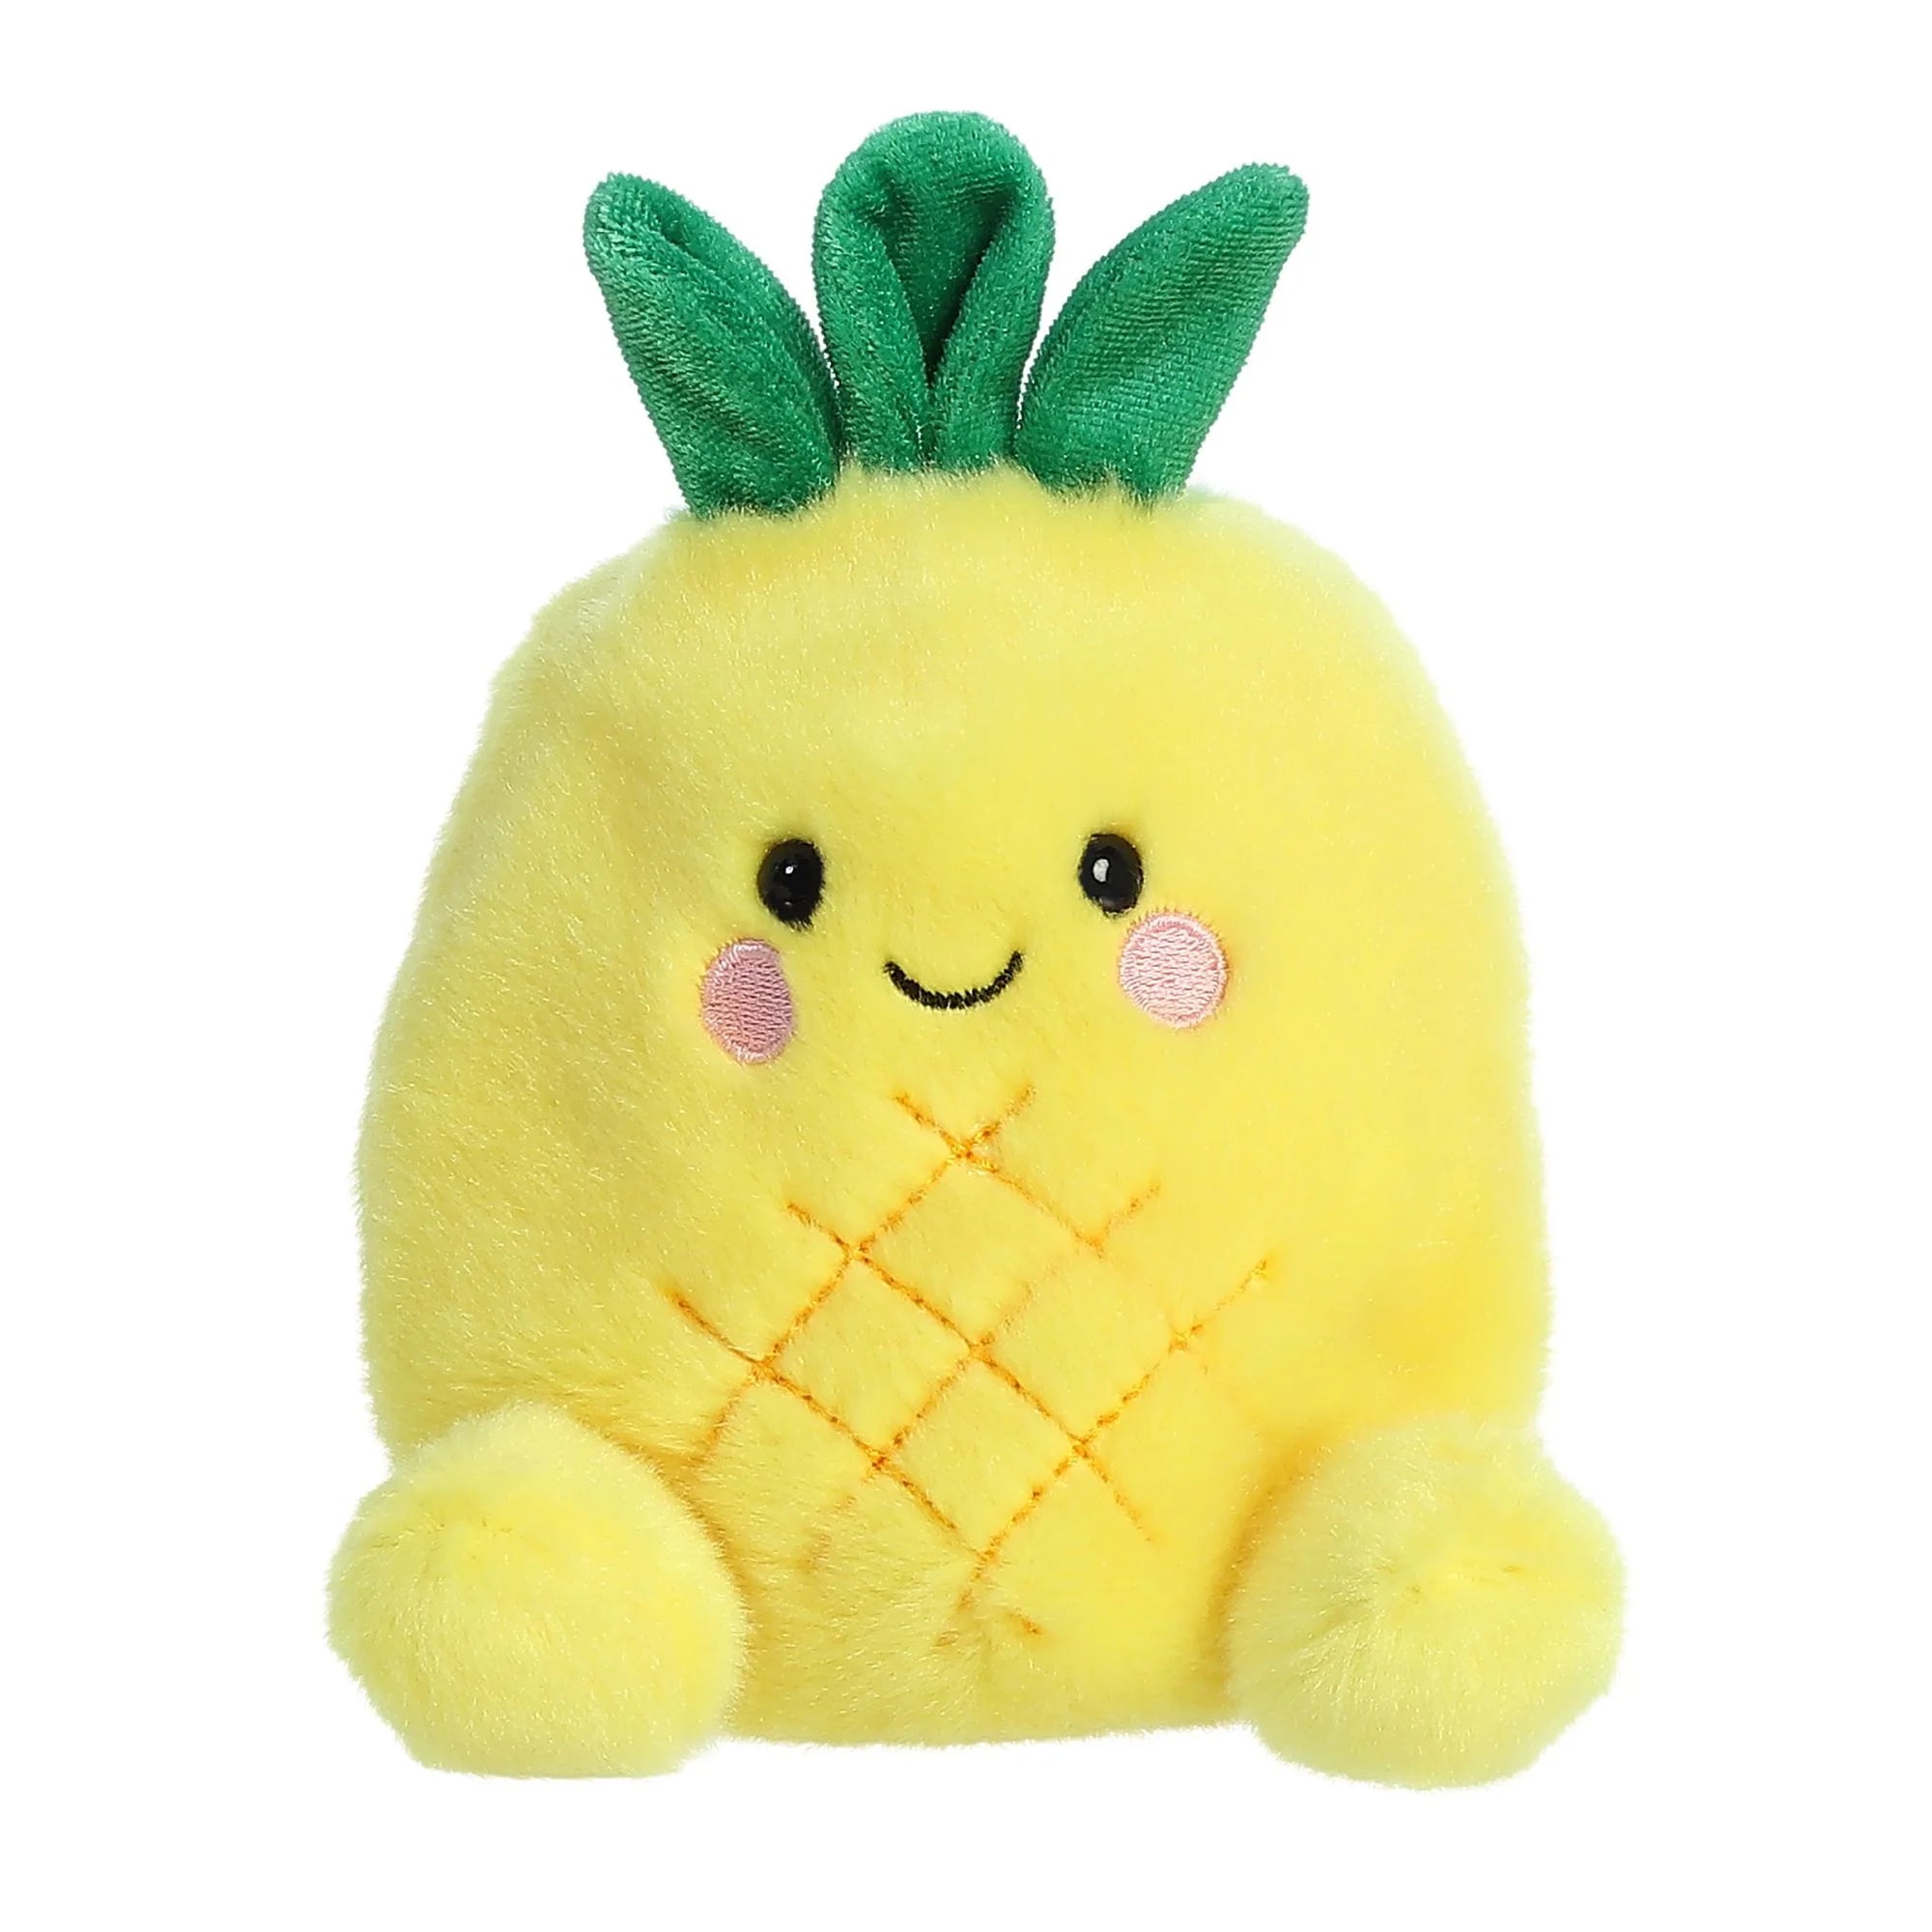 Perky Pineapple